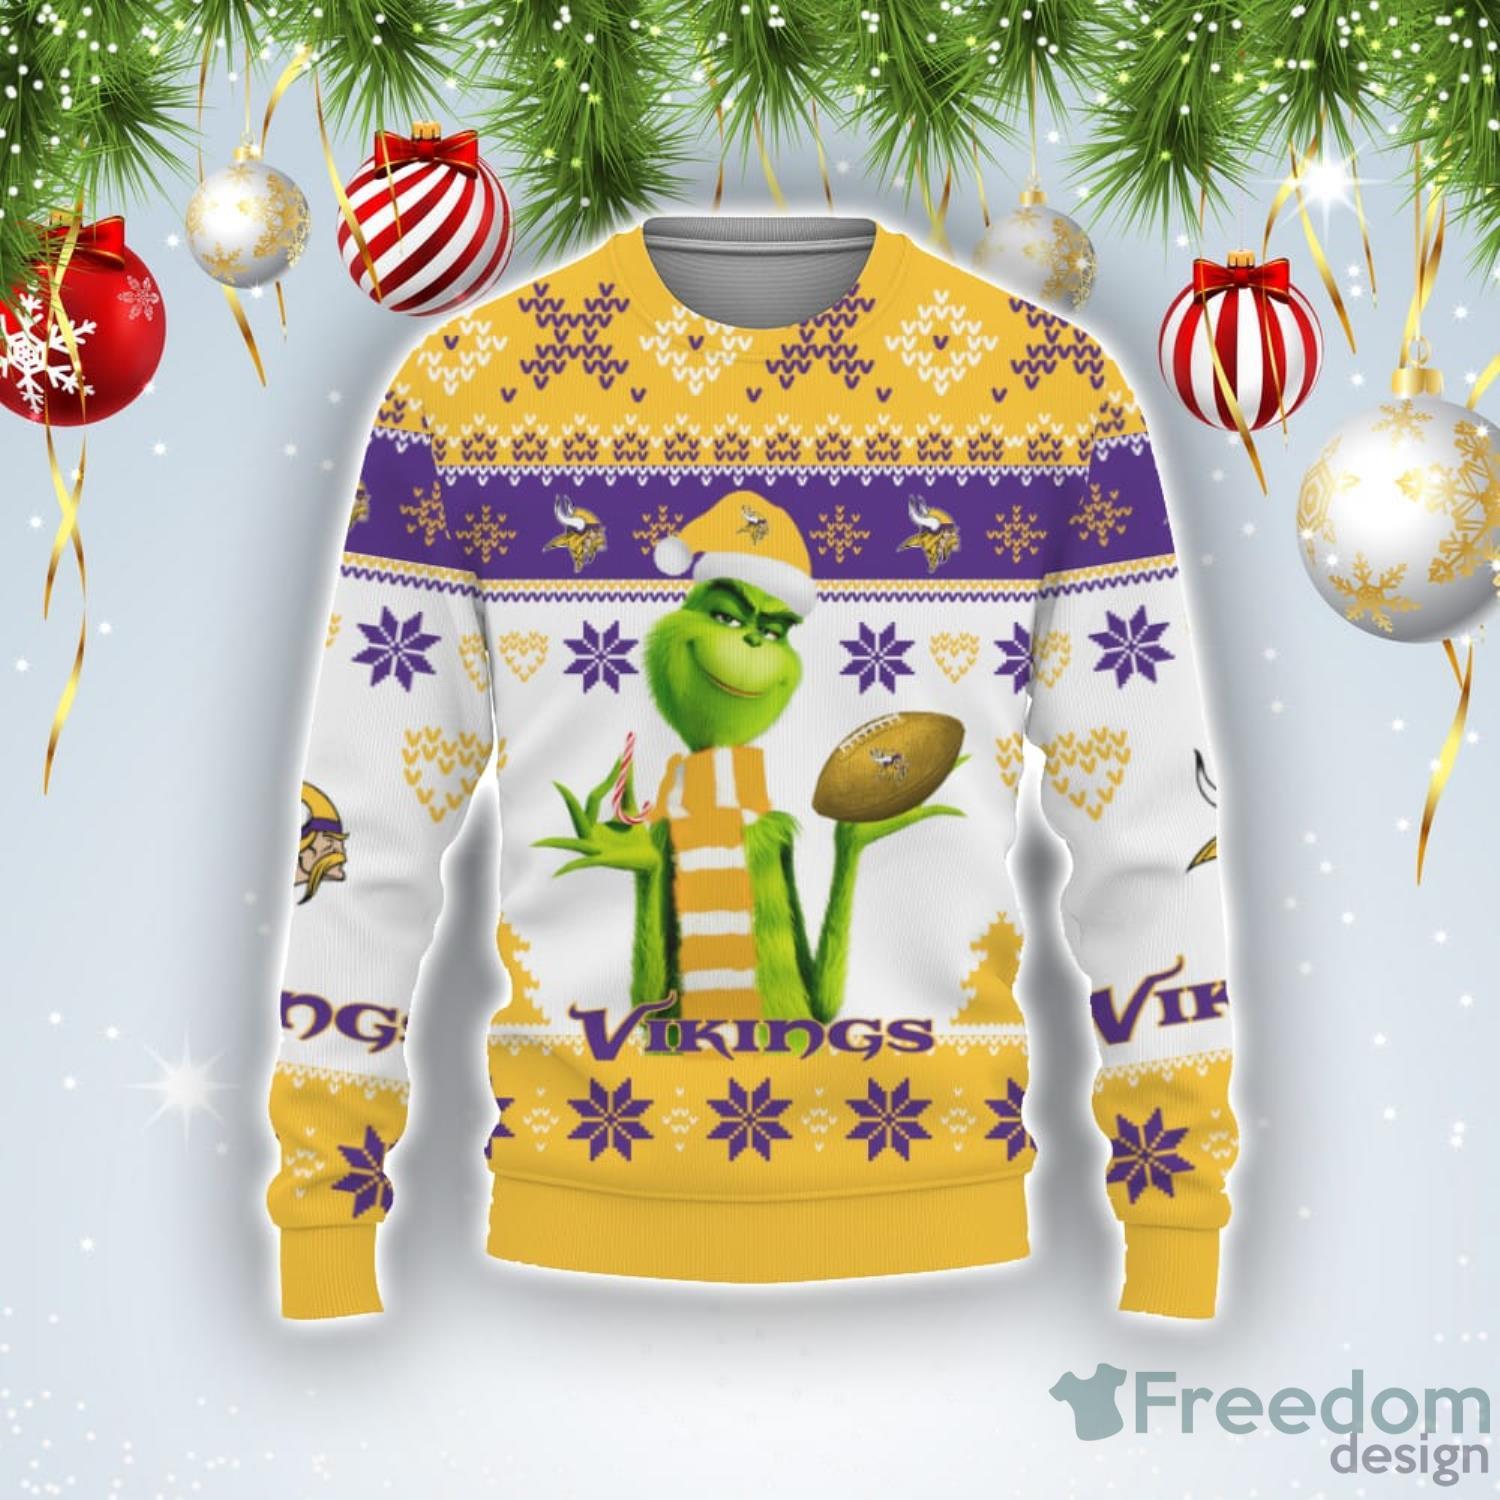 vikings holiday sweater